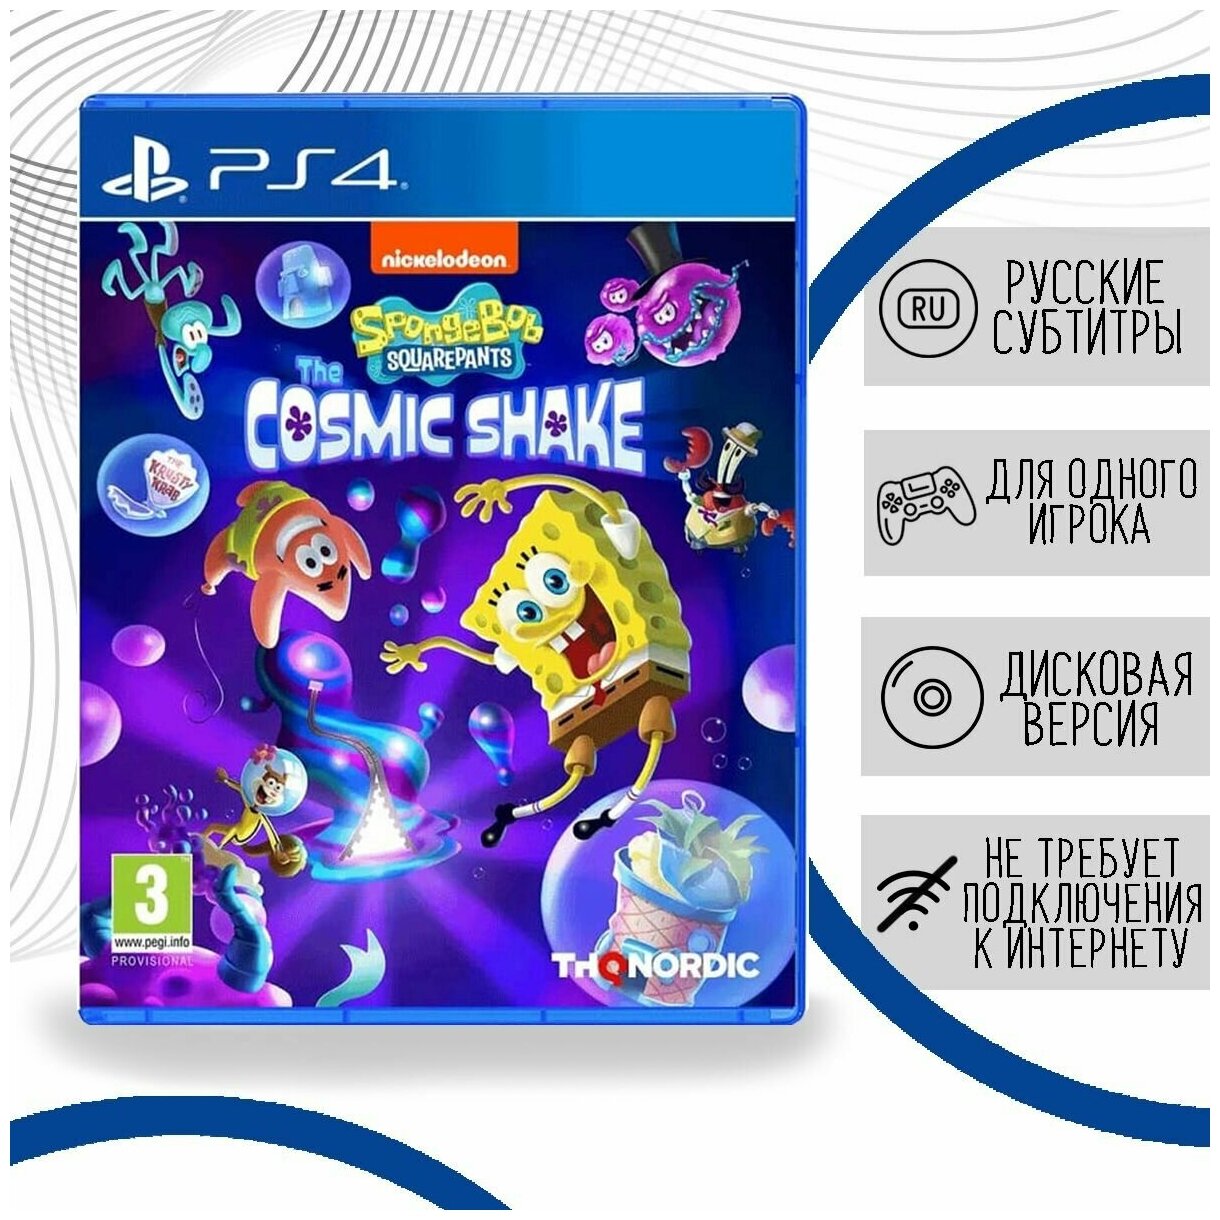 SpongeBob SquarePants: The Cosmic Shake (PS4 русские субтитры)